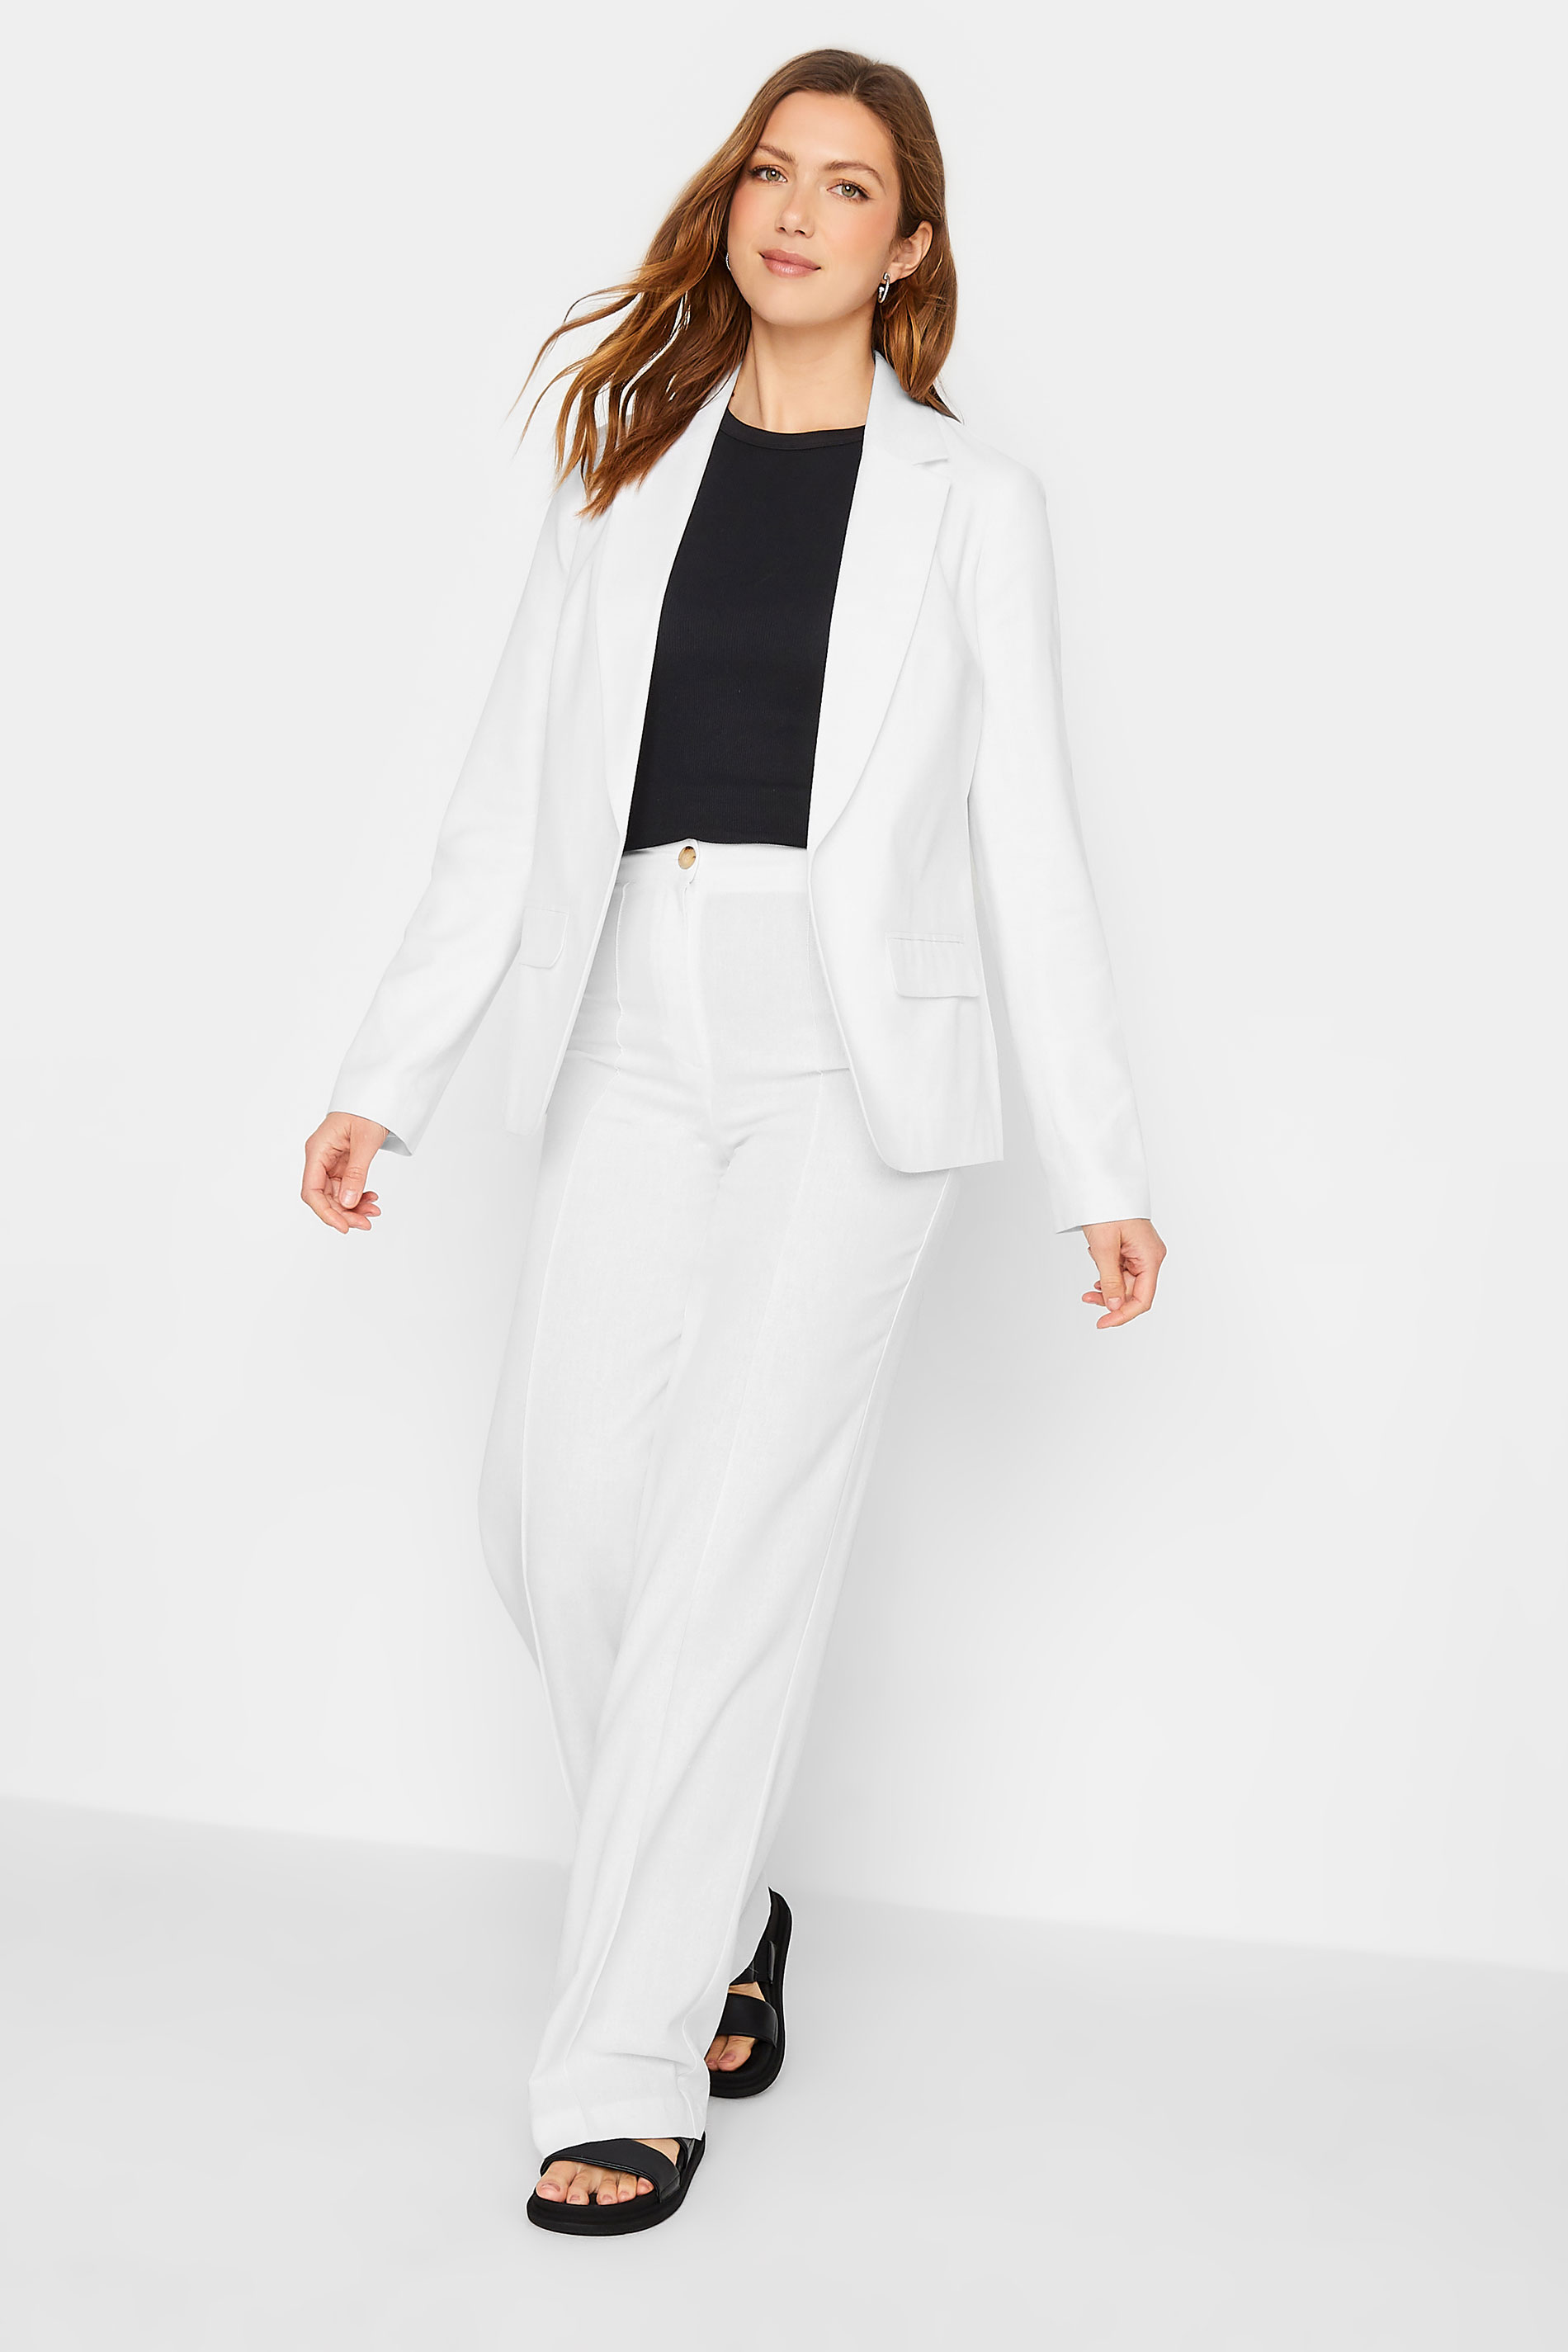 LTS Tall White Linen Look Blazer Jacket | Long Tall Sally  2